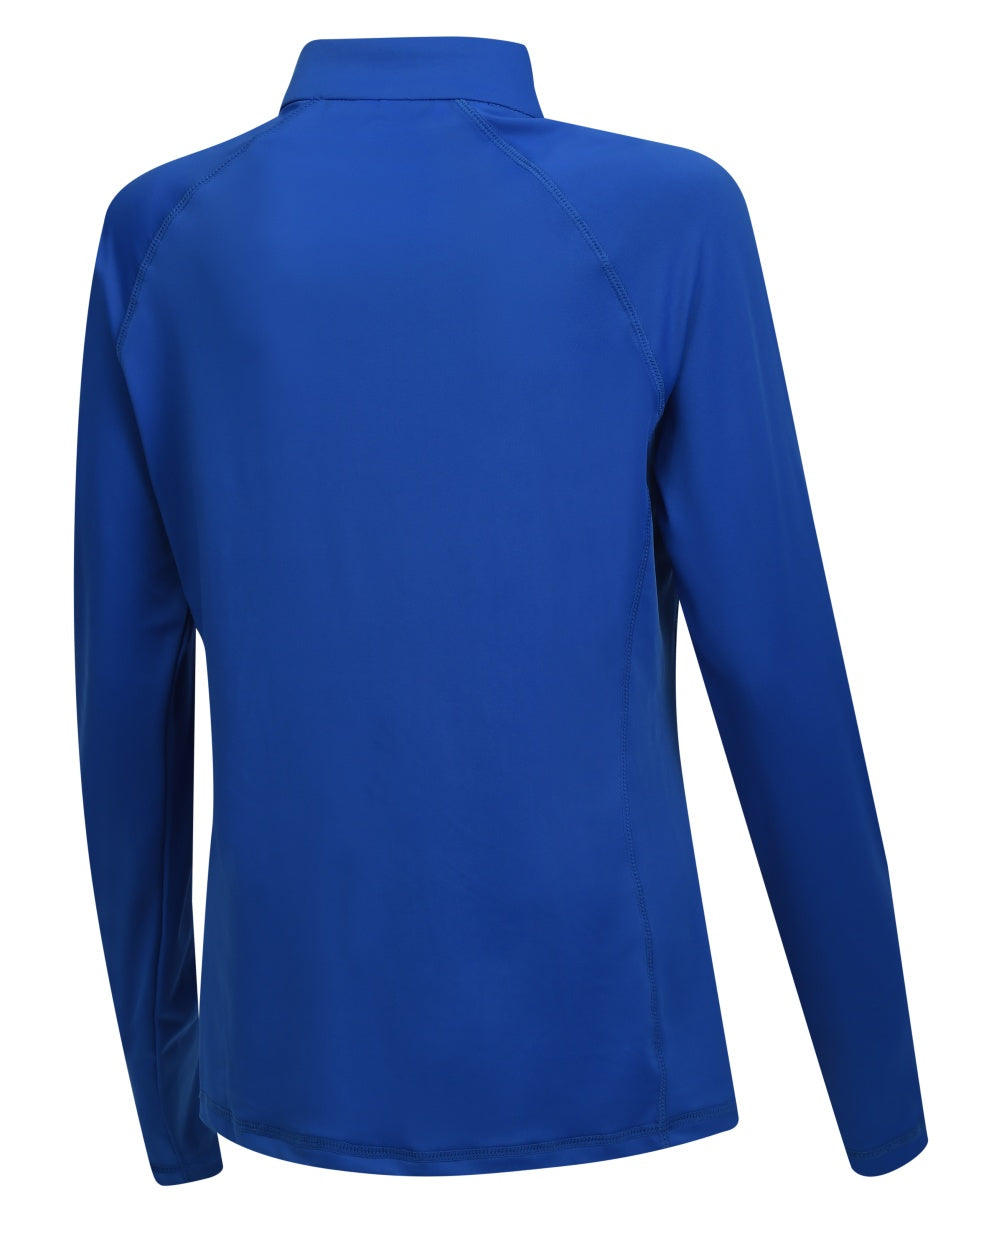 Royal Blue coloured WeatherBeeta Prime Long Sleeve Top on white background 